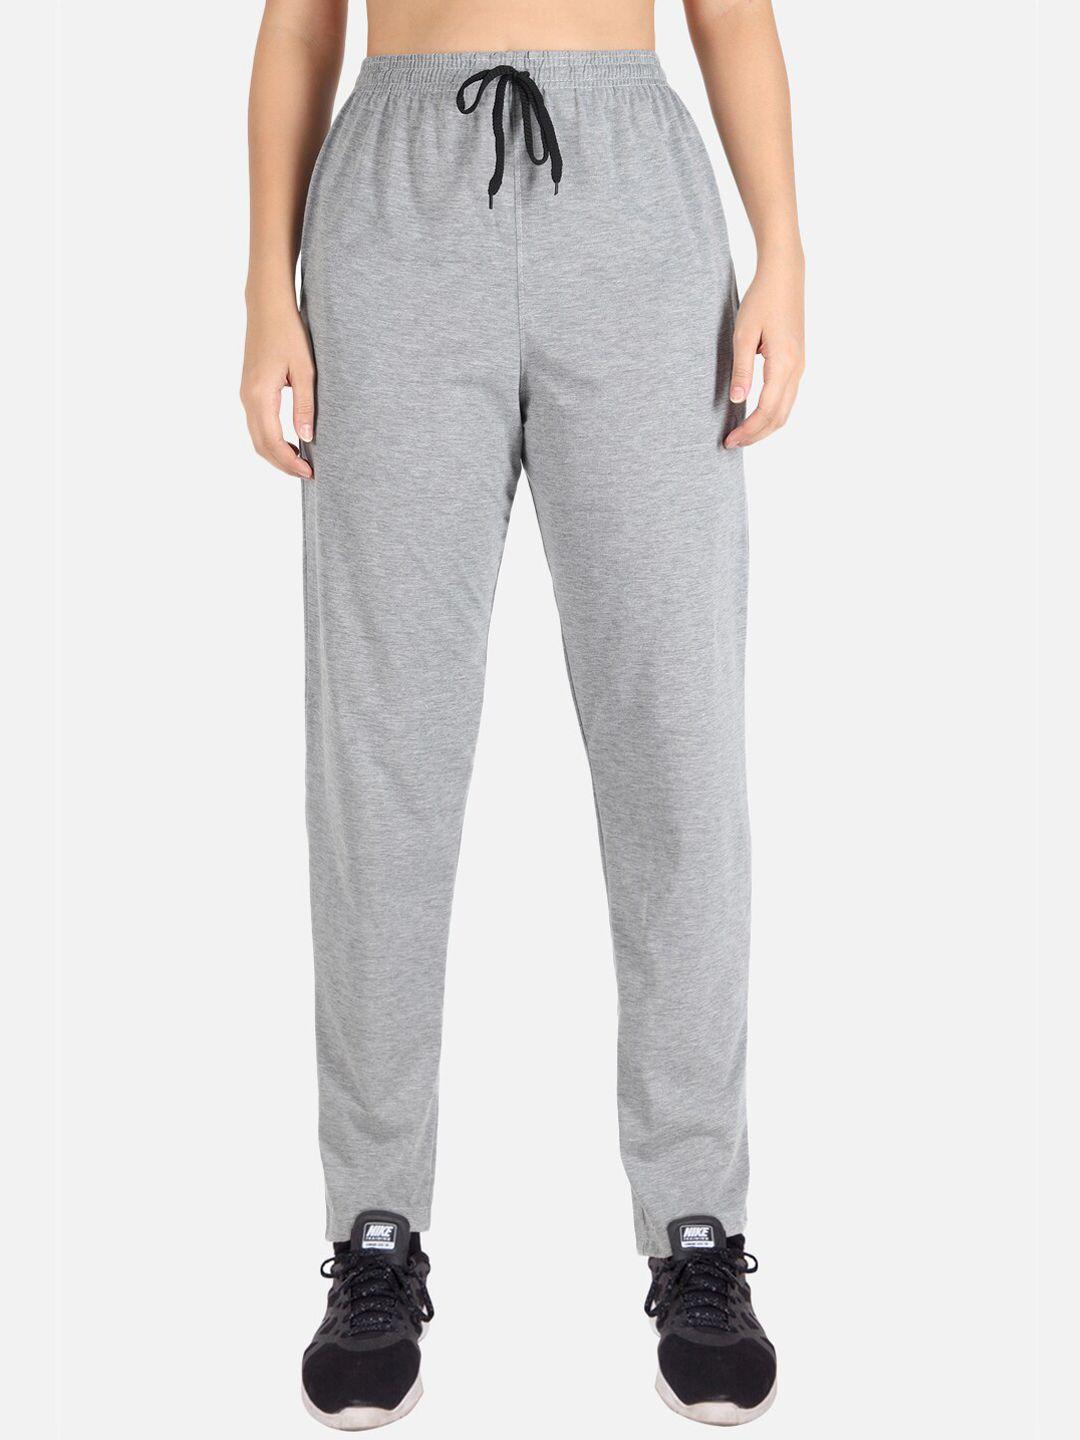 fflirtygo-women-grey-melange-solid-relaxed-fit-cotton-track-pants